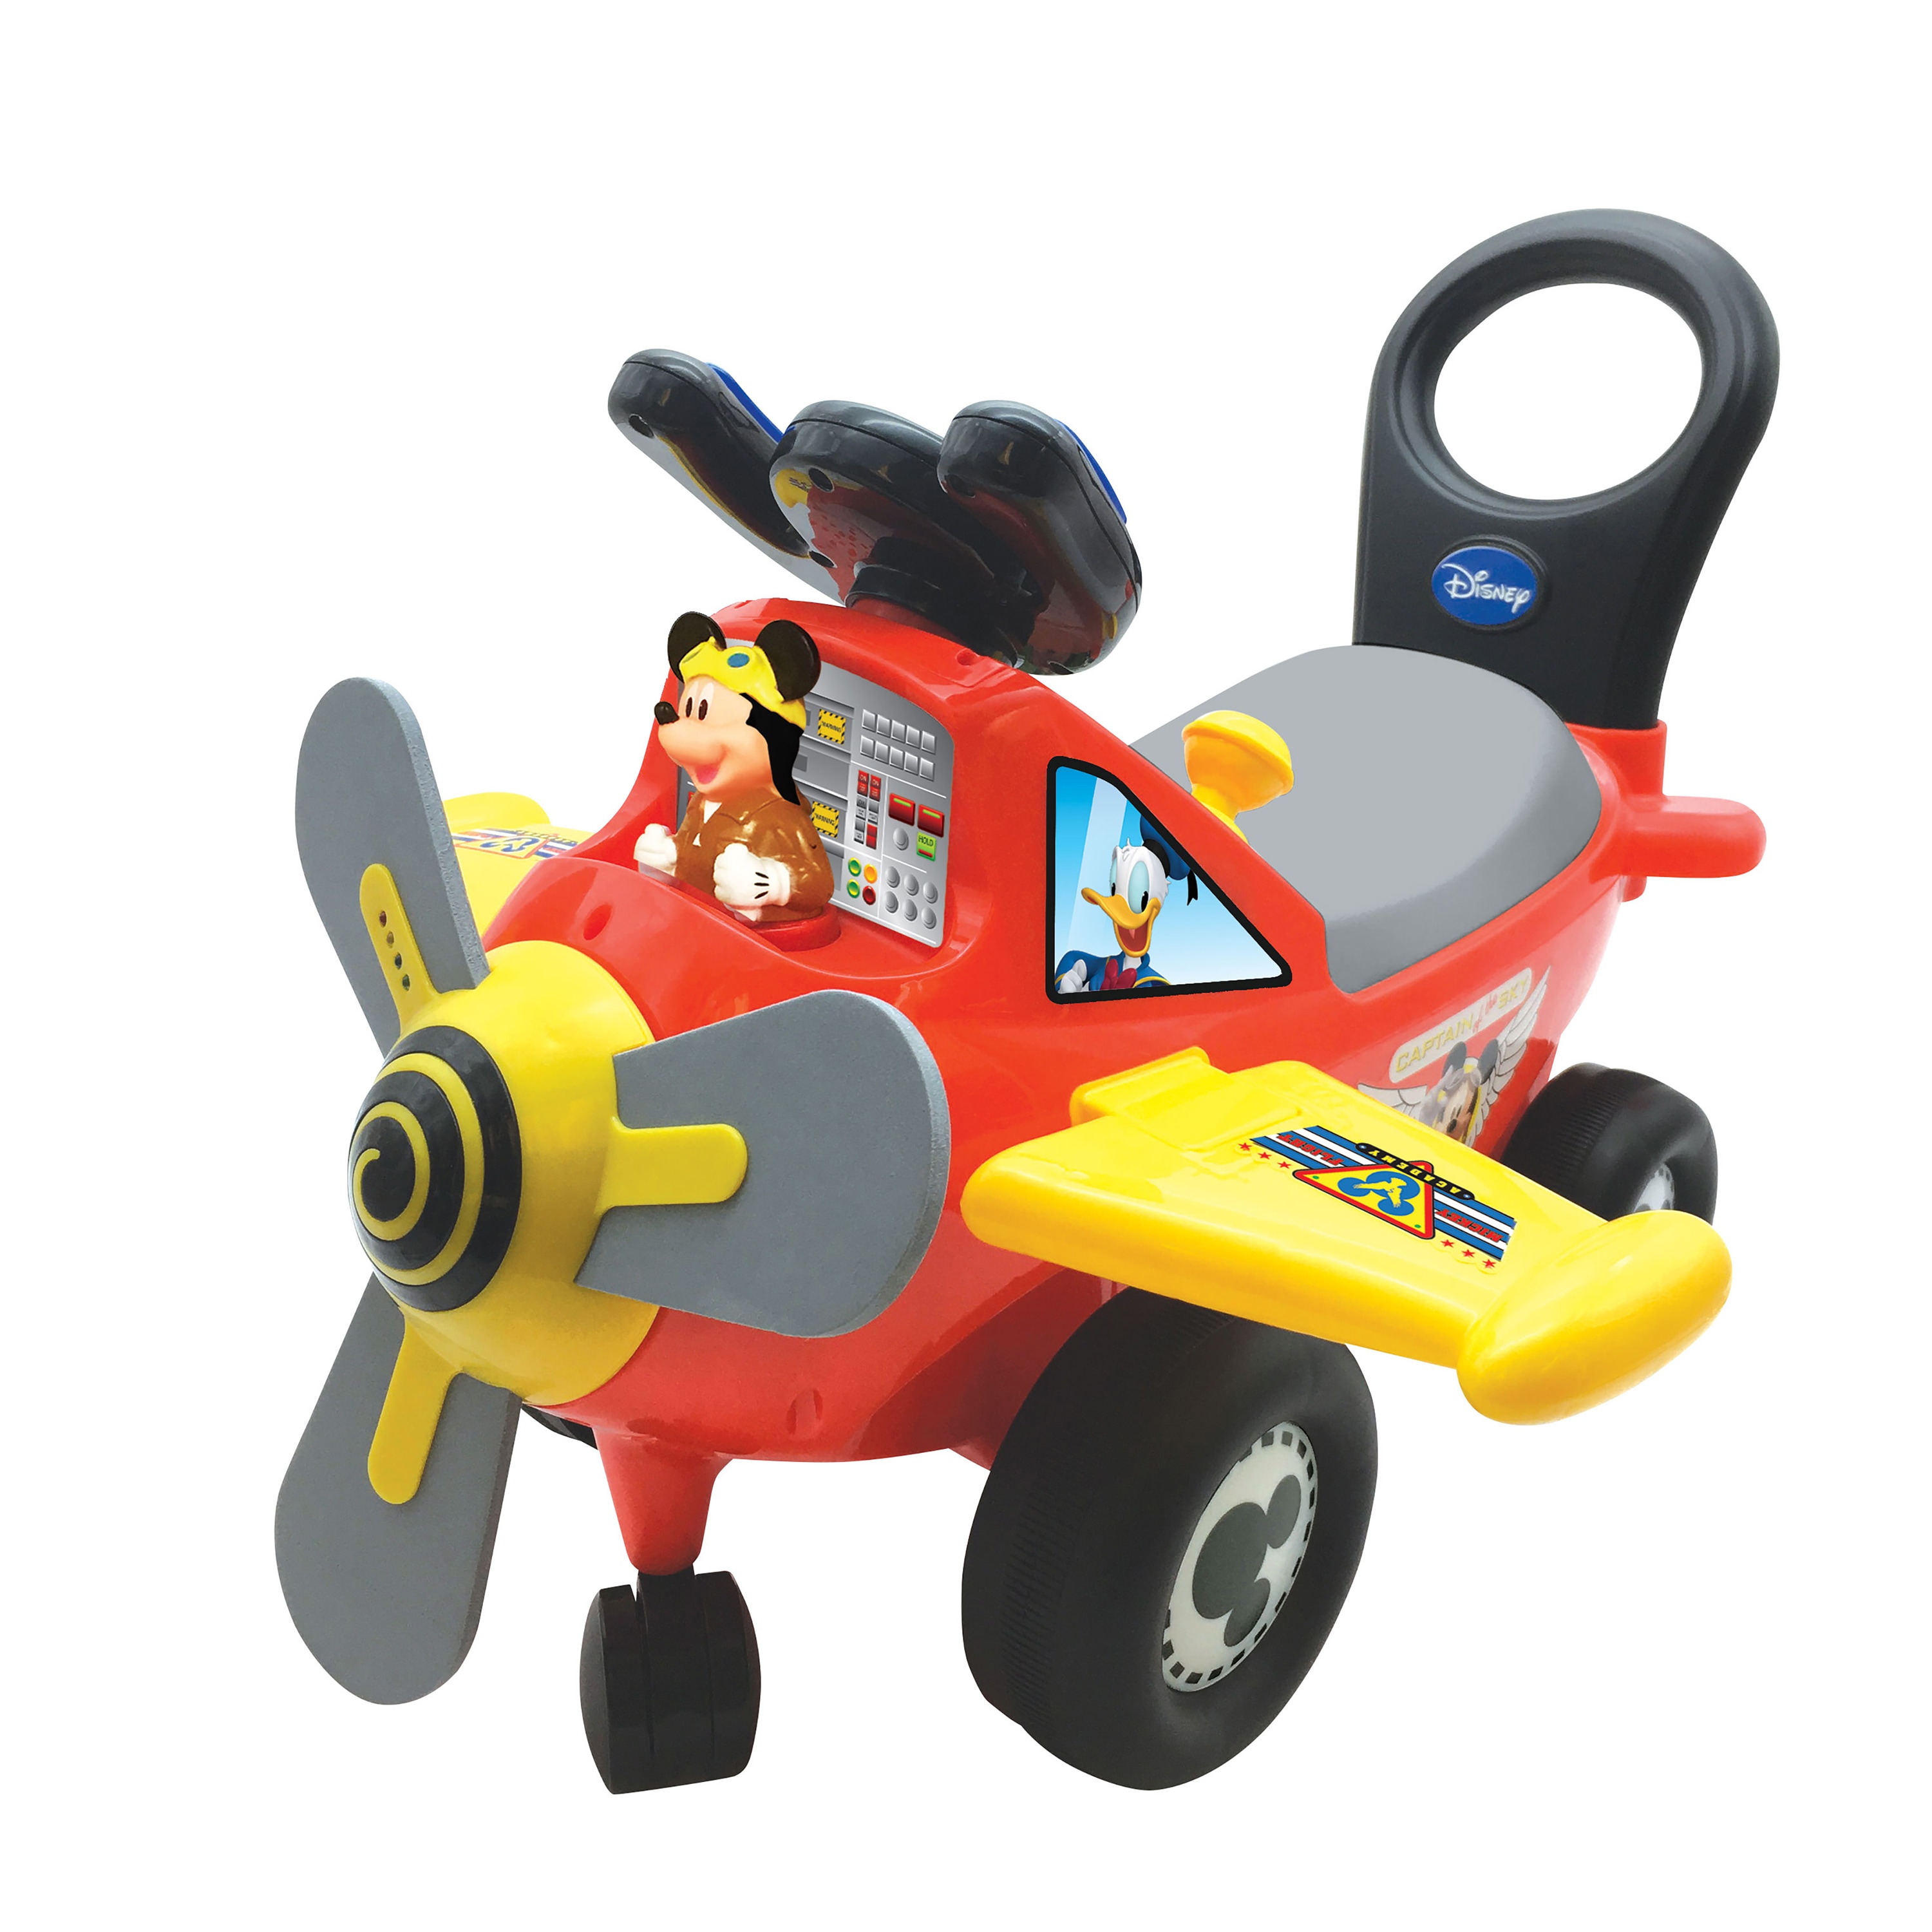 Kiddieland Disney Buzz Lightyear Ride On Toy with Music, Lights